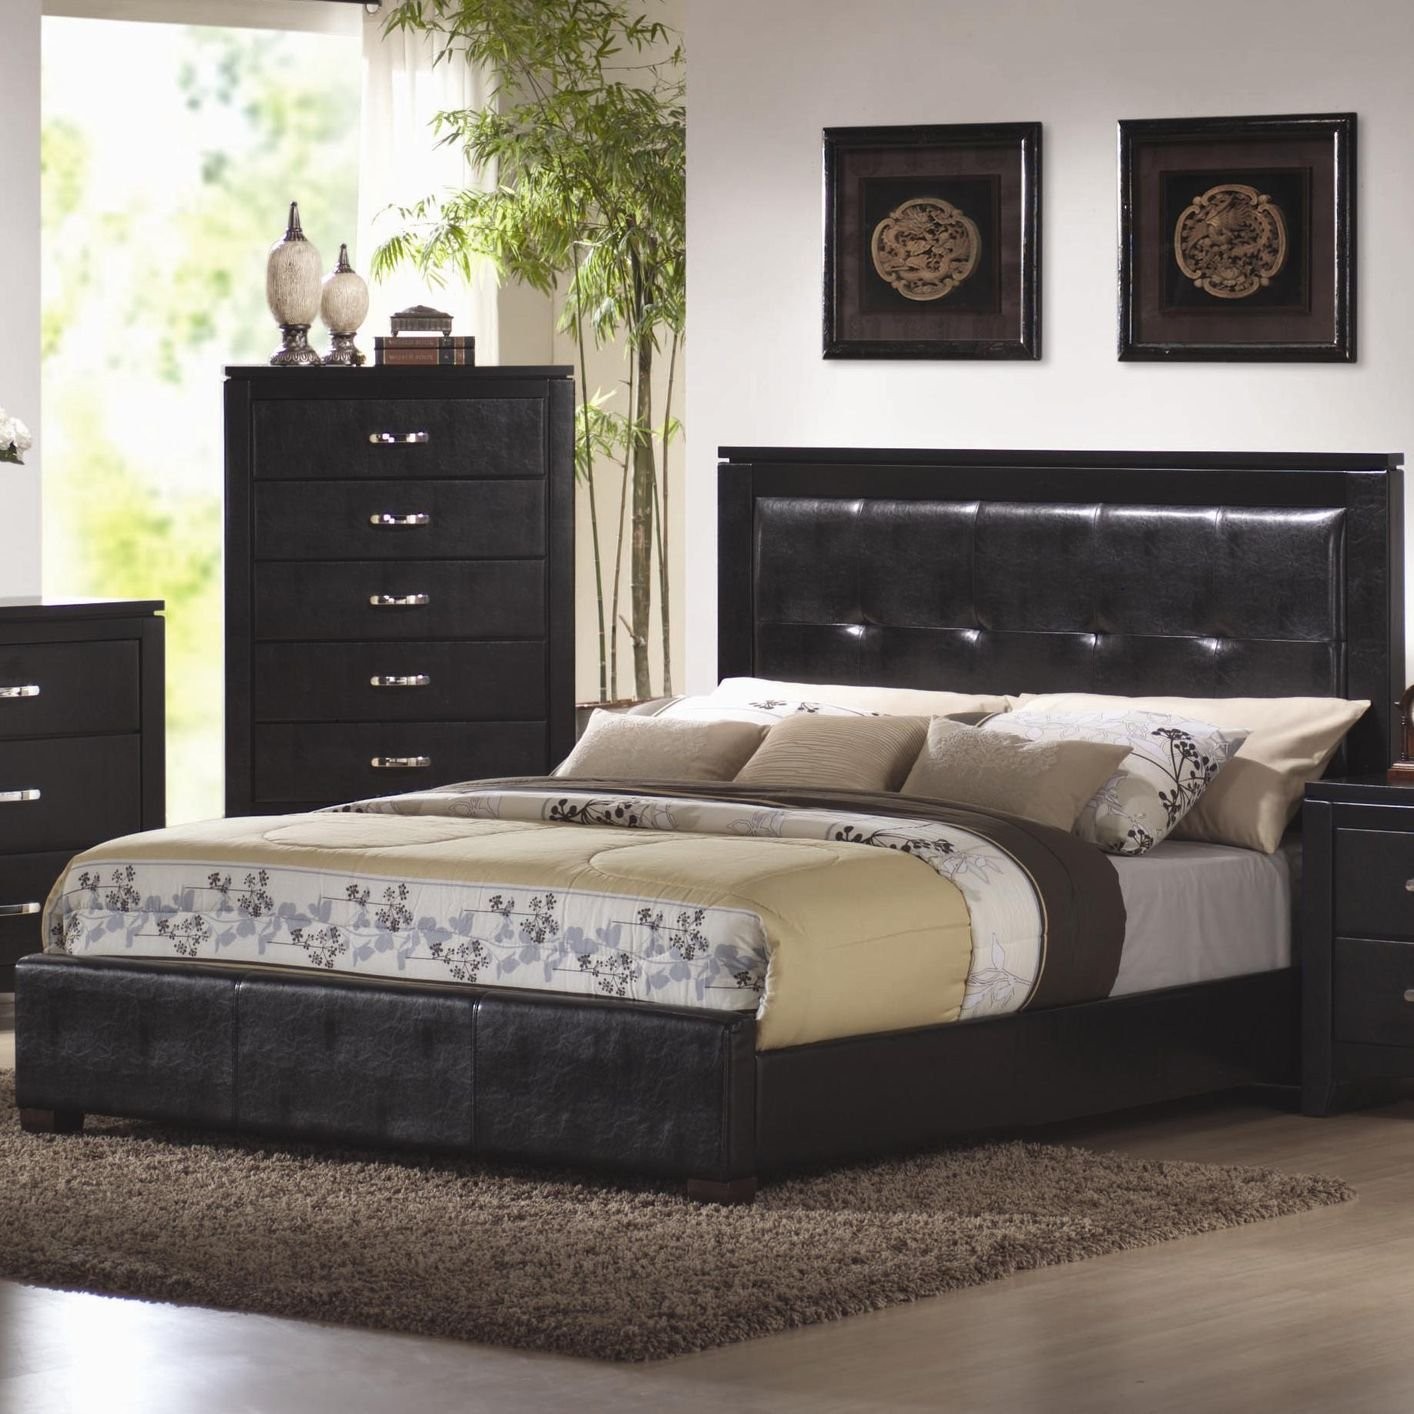 black california king bedroom furniture sets photo - 2